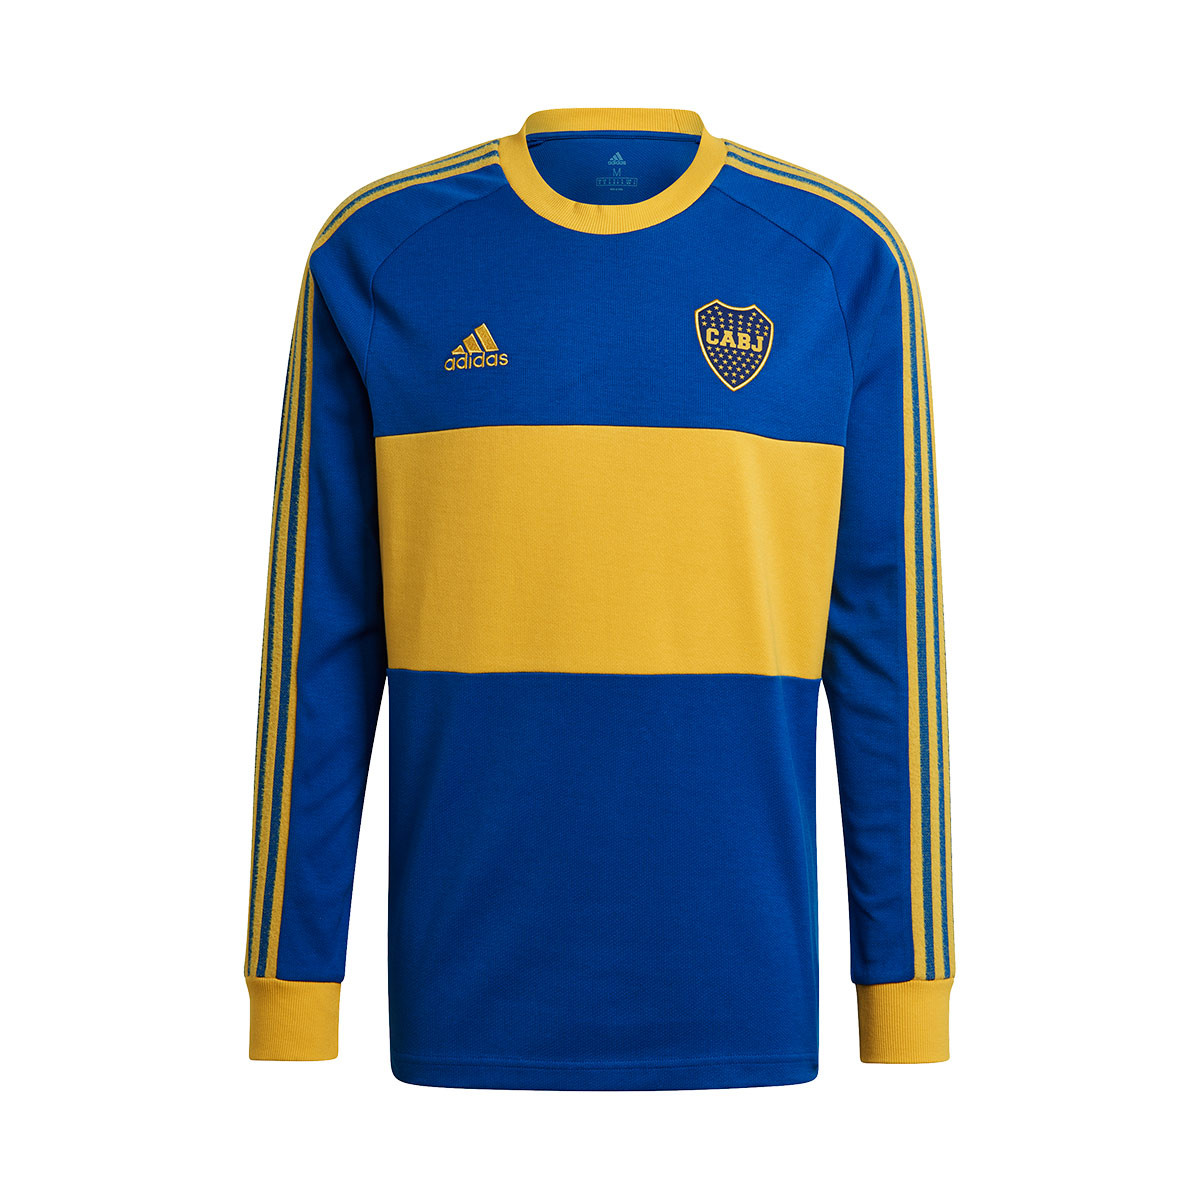 Boca Juniors Adidas Icon Jersey | Retro | Football shirt blog